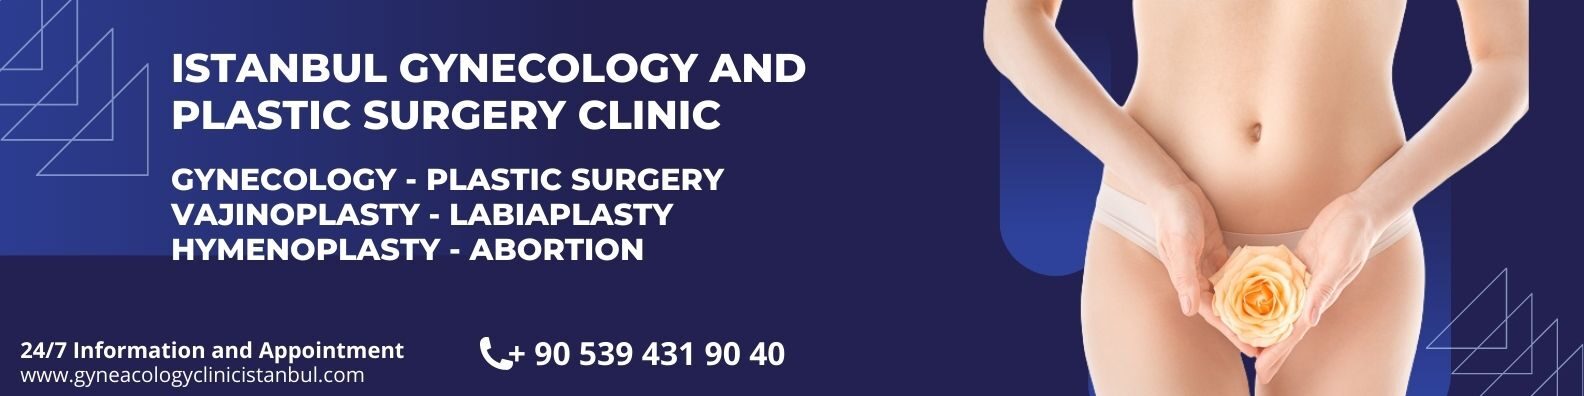 Gyneacology Clinic Istanbul Abortion Hymen repair labioplasty vajinoplasty Istanbul Gynecology and Aesthetics Surgery Clinic